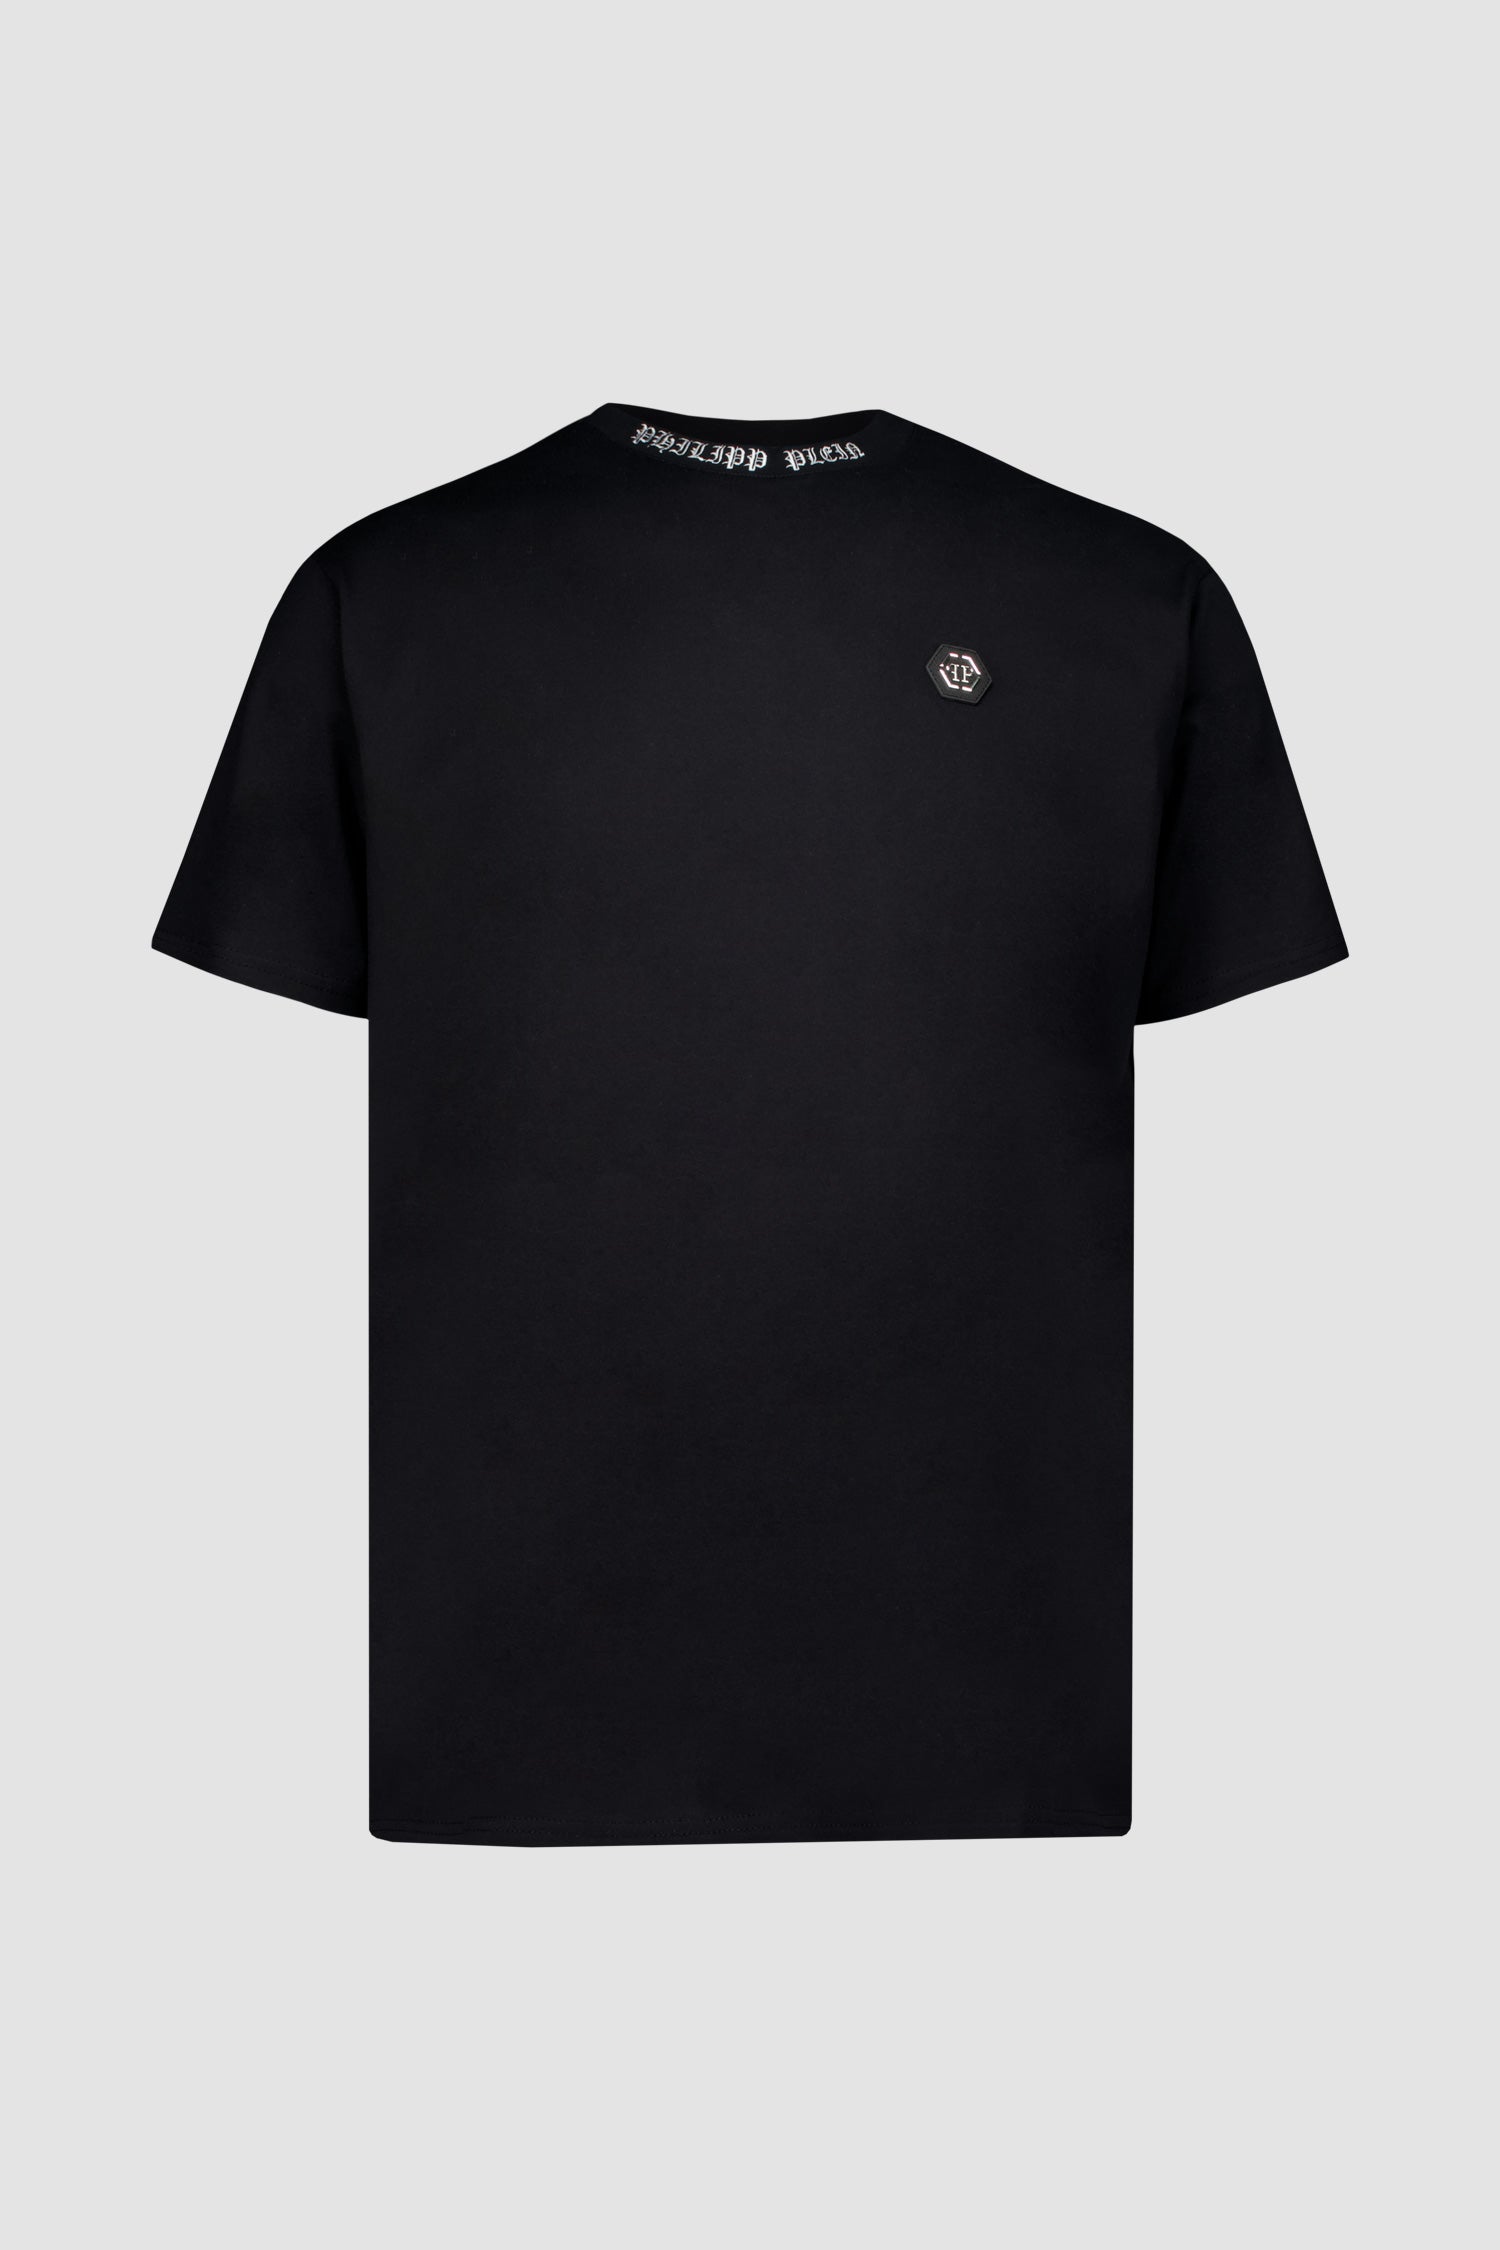 Philipp Plein Black Round Neck SS PAK T-Shirt